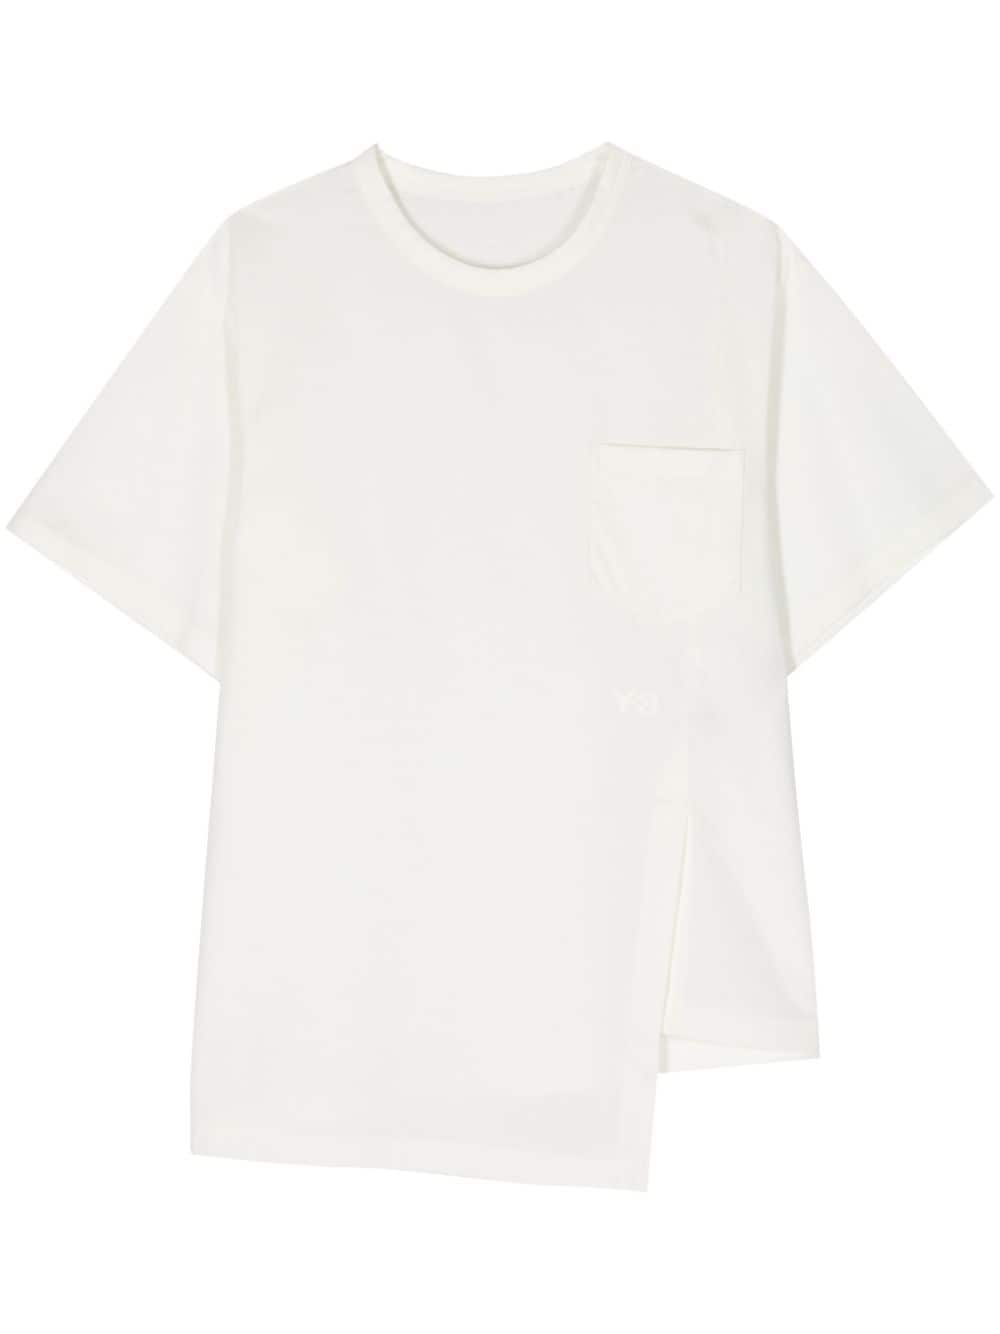 Y-3 x Adidas T-Shirt - Weiß von Y-3